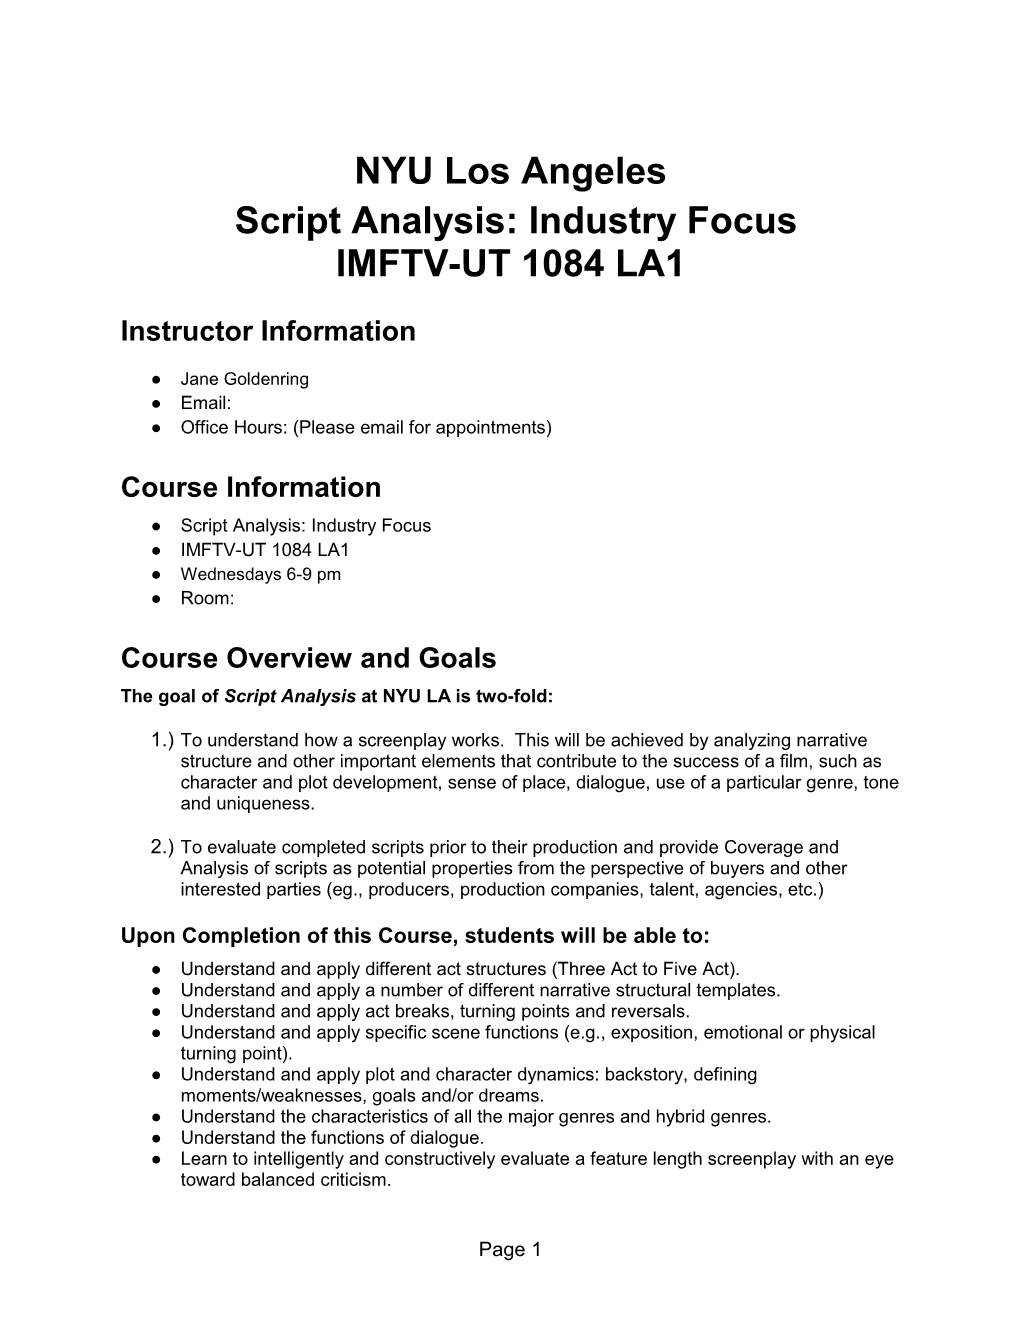 NYU Los Angeles Script Analysis: Industry Focus IMFTV-UT 1084 LA1